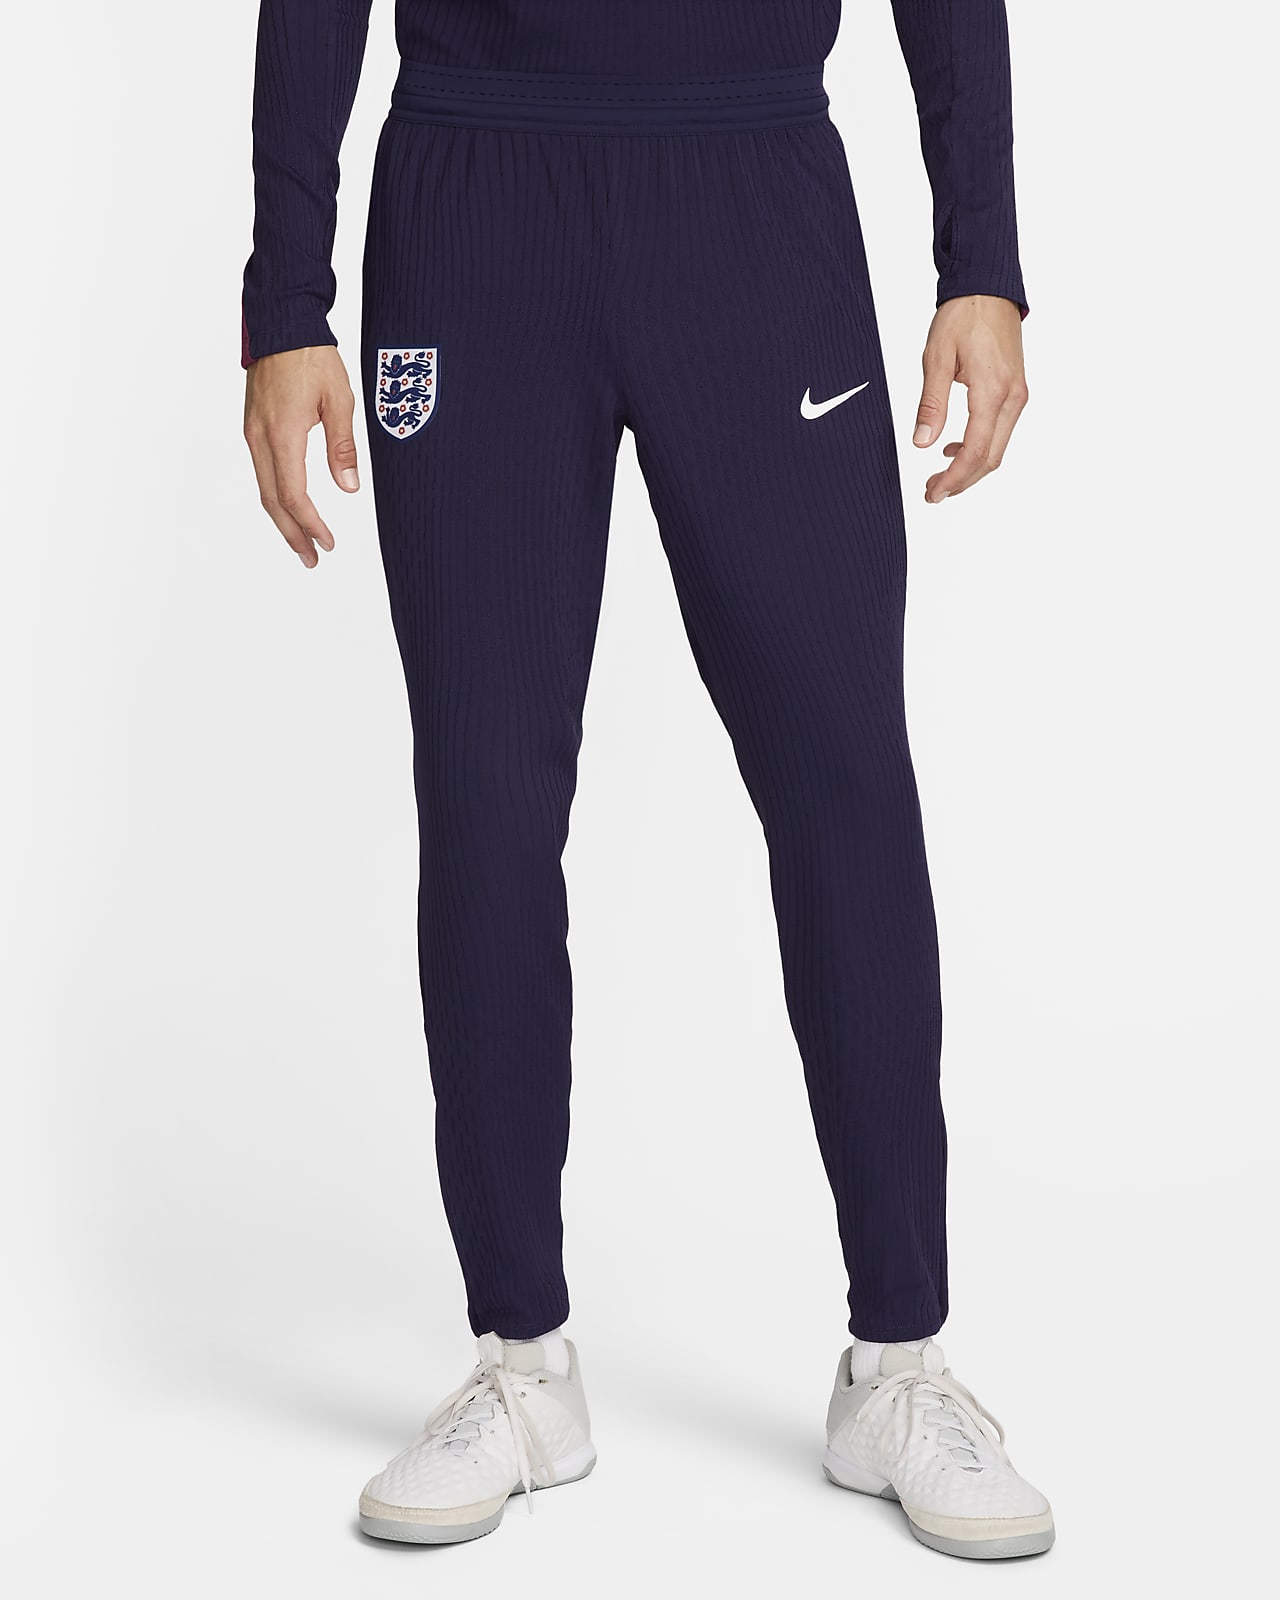 England Strike Elite Men's Nike Dri-FIT ADV Football Knit Pants